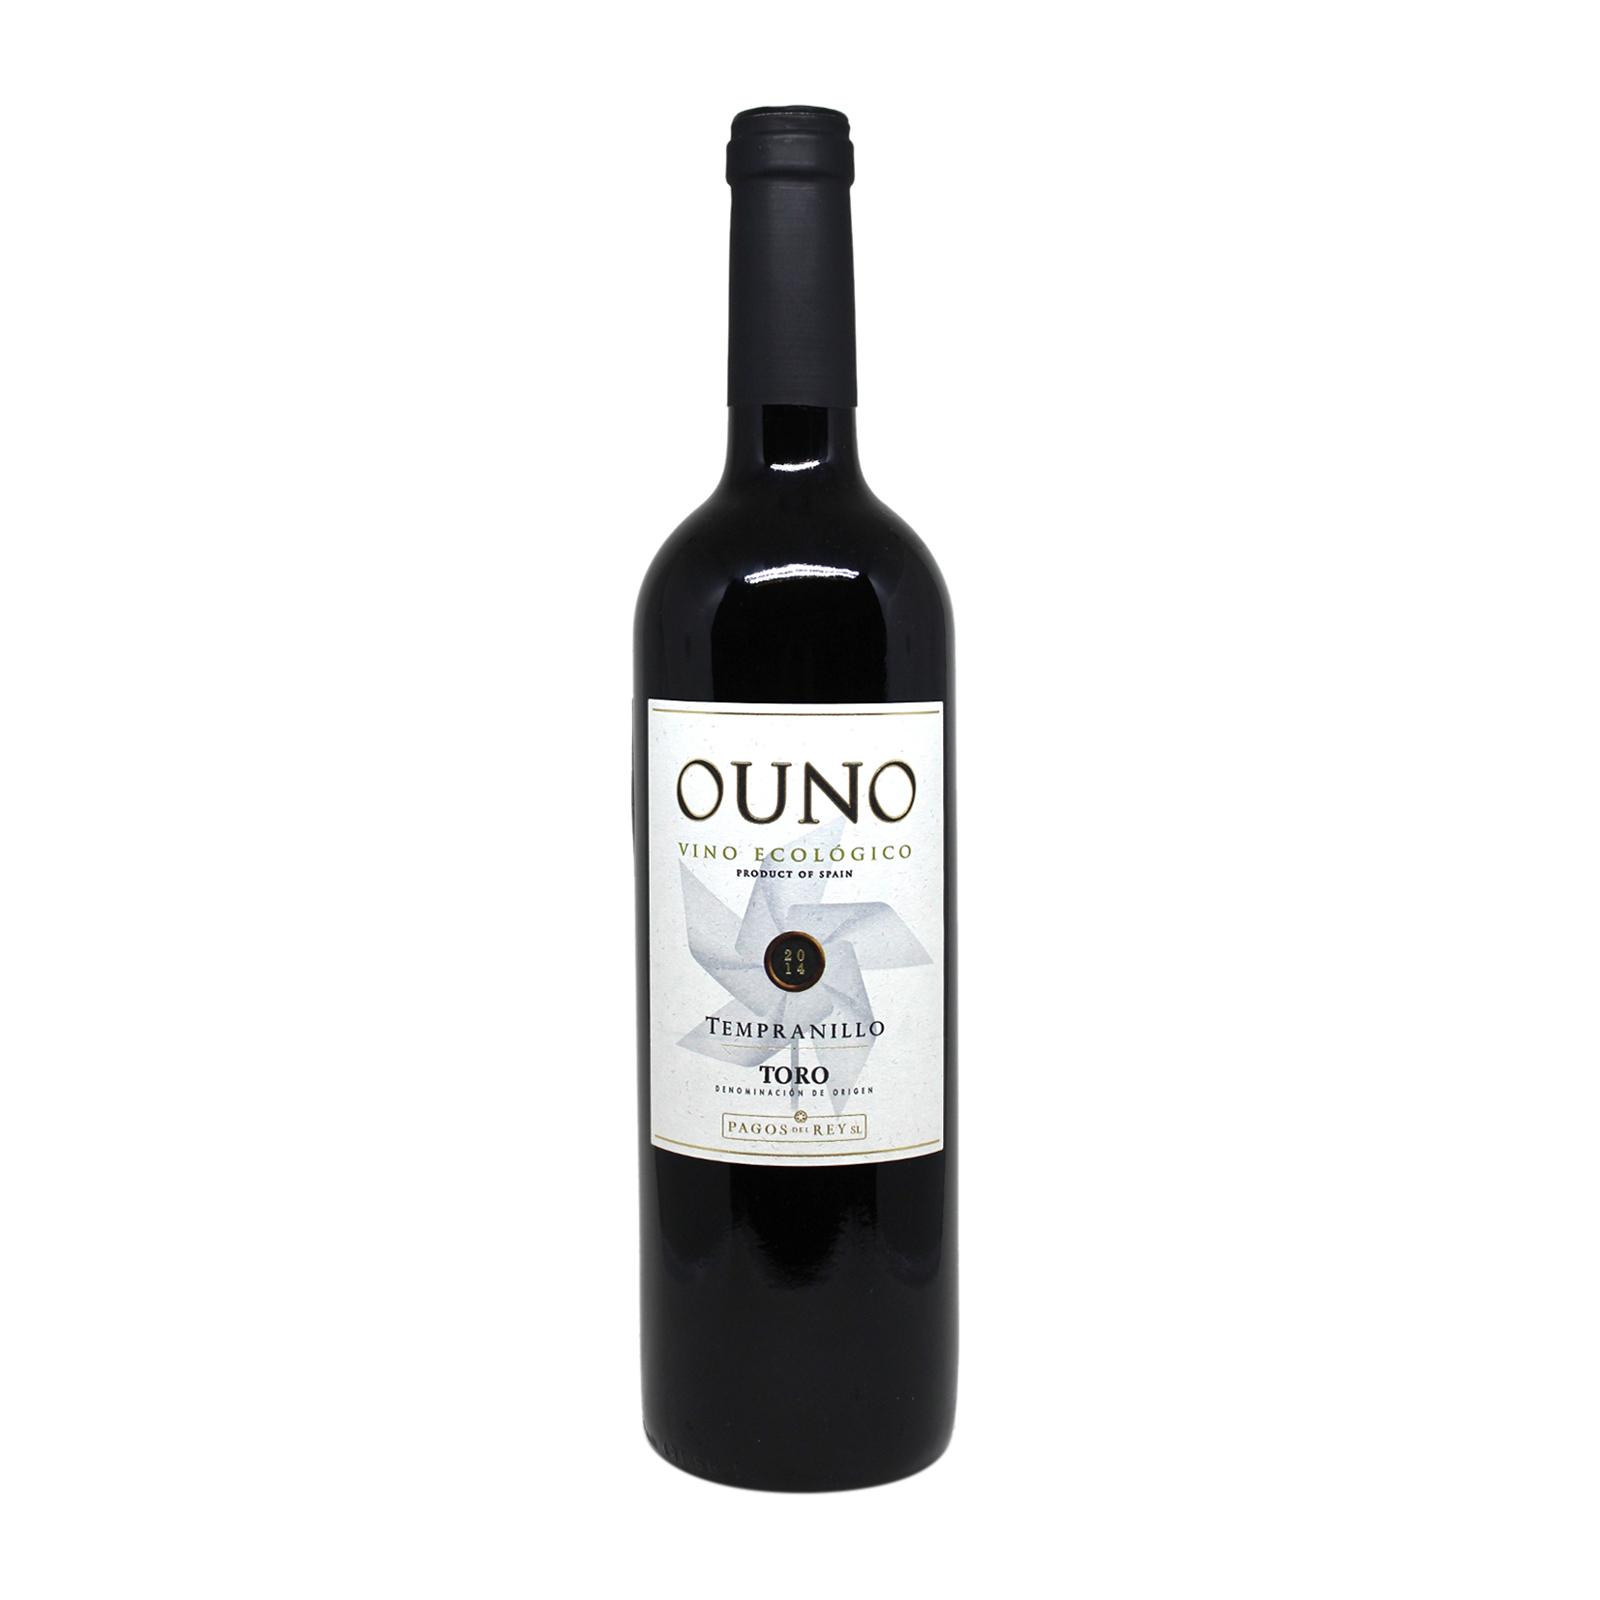 Ouno Organic Tempranillo 2019 Red Wine – Toro Spain